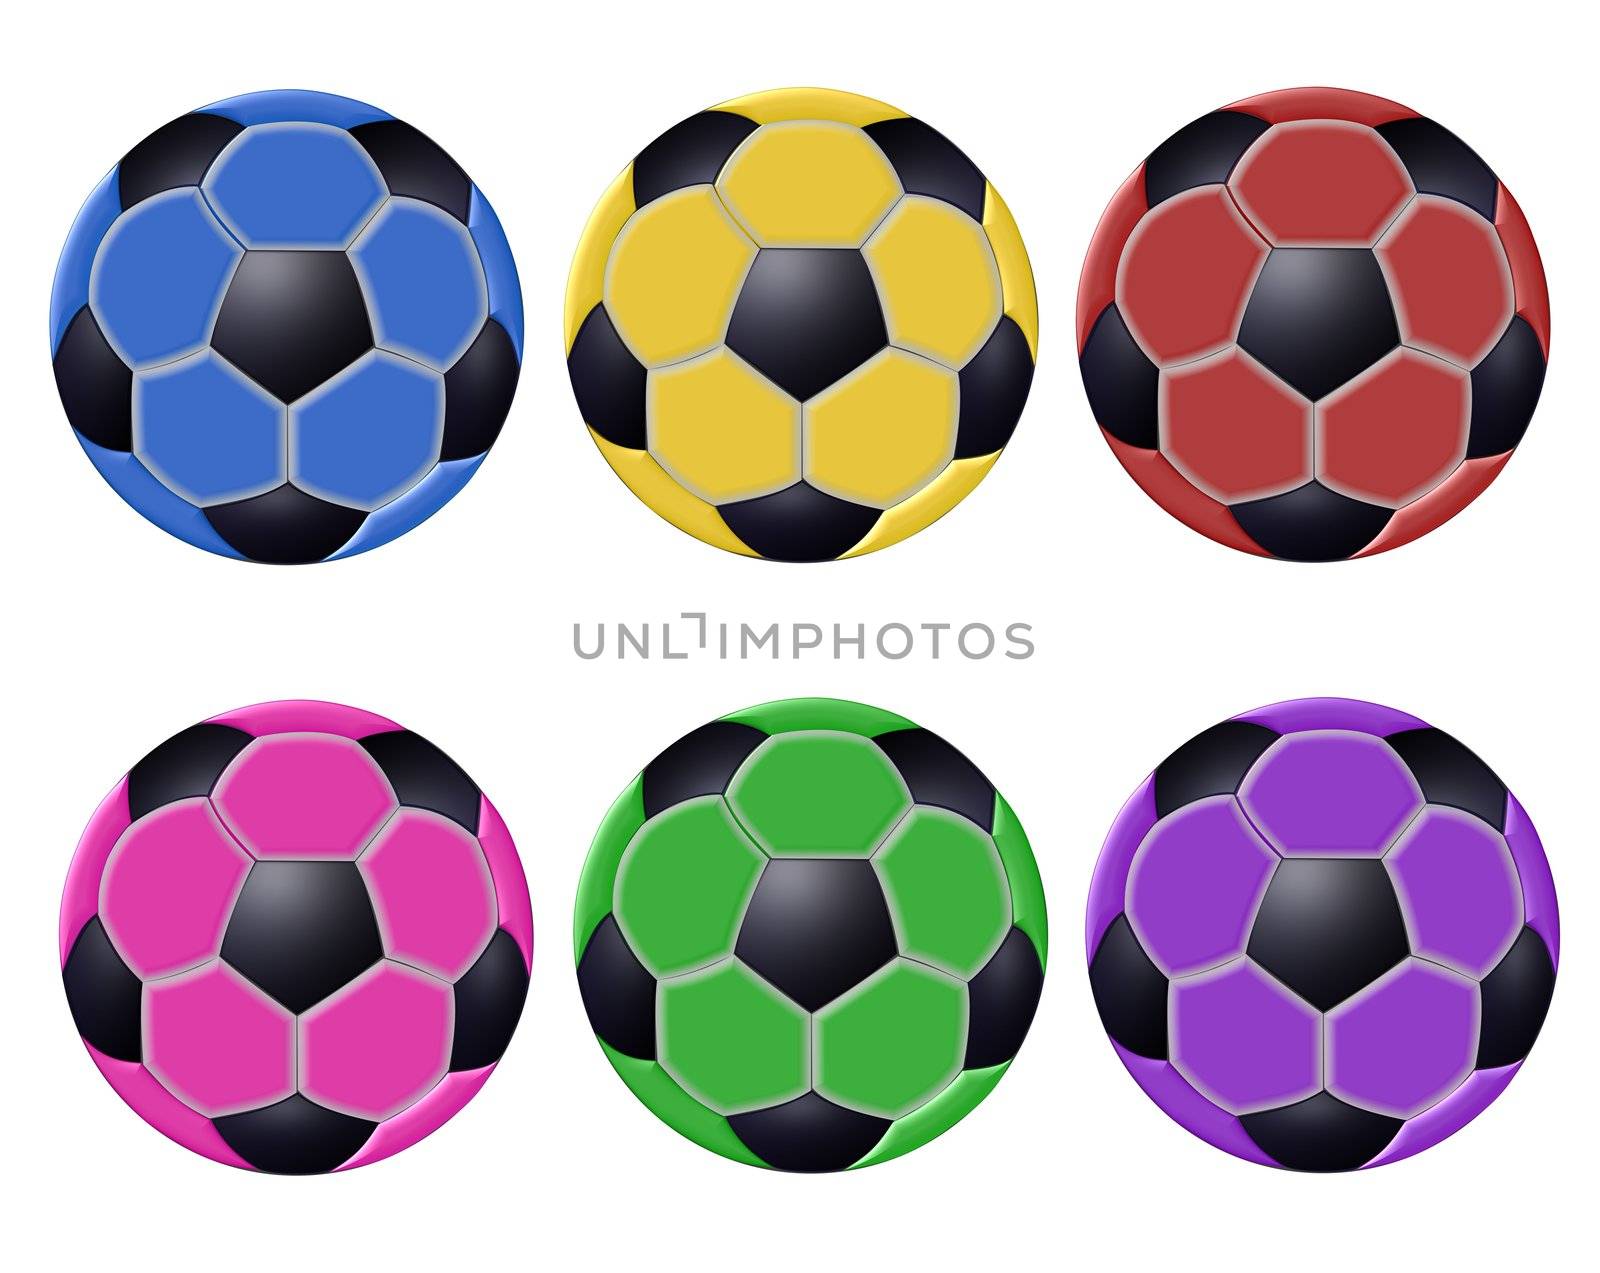 illustration of colorful soccer balls